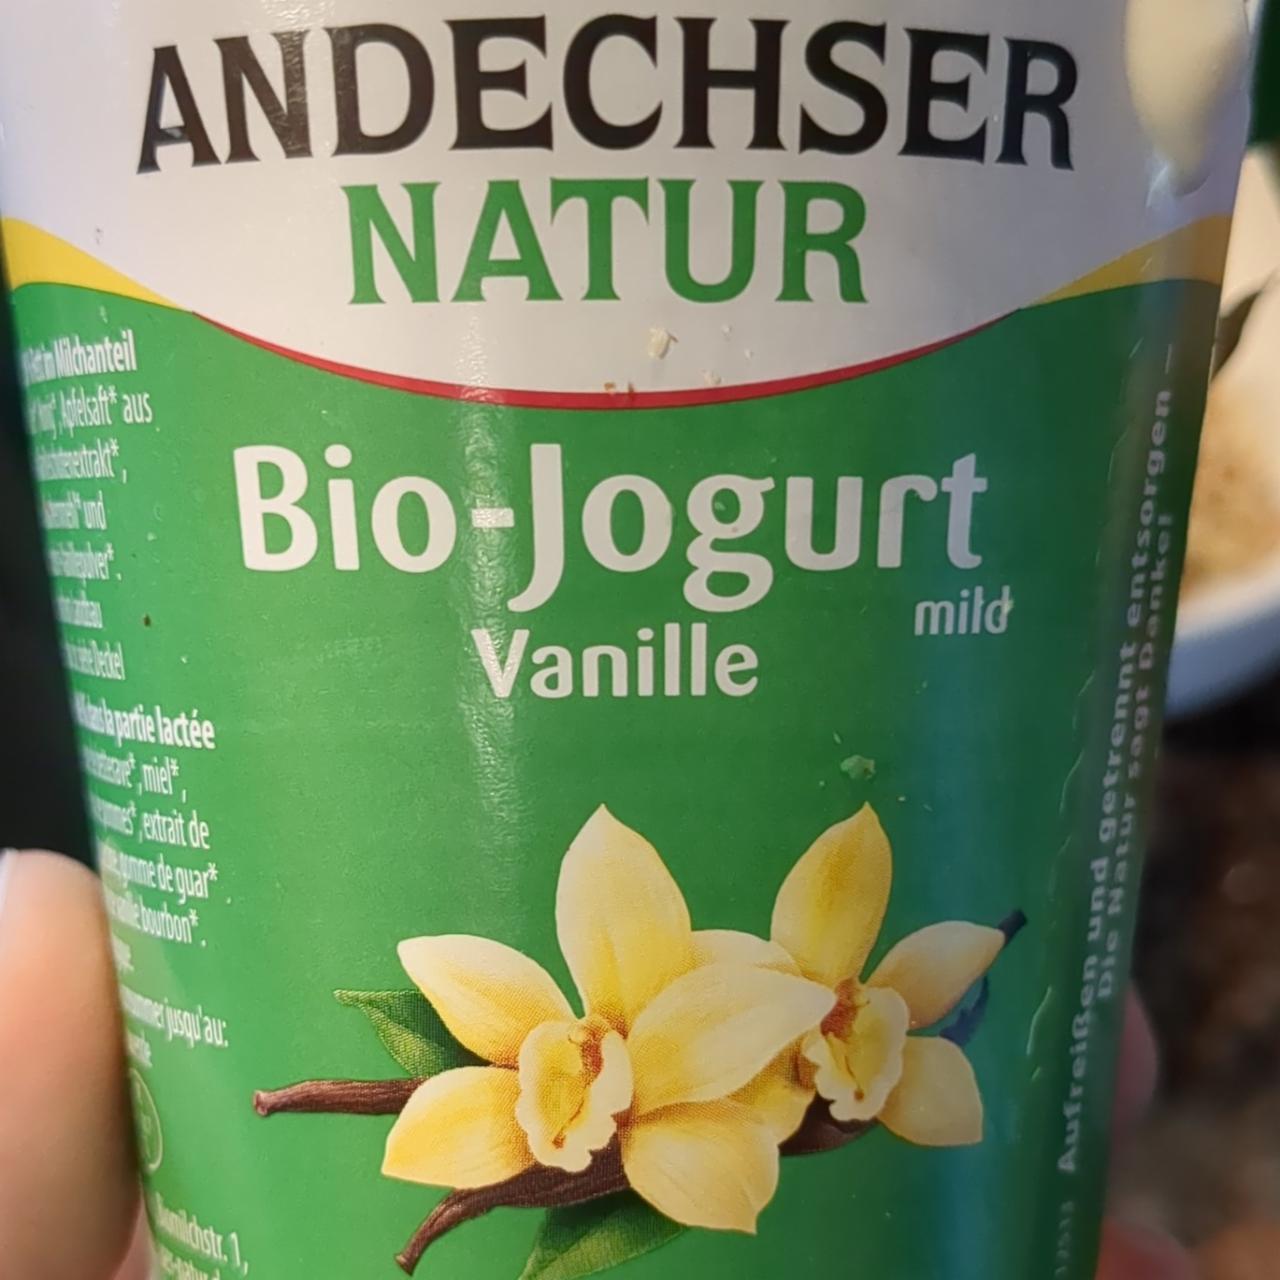 Fotografie - Bio-Jogurt Vanille mild Andechser natur